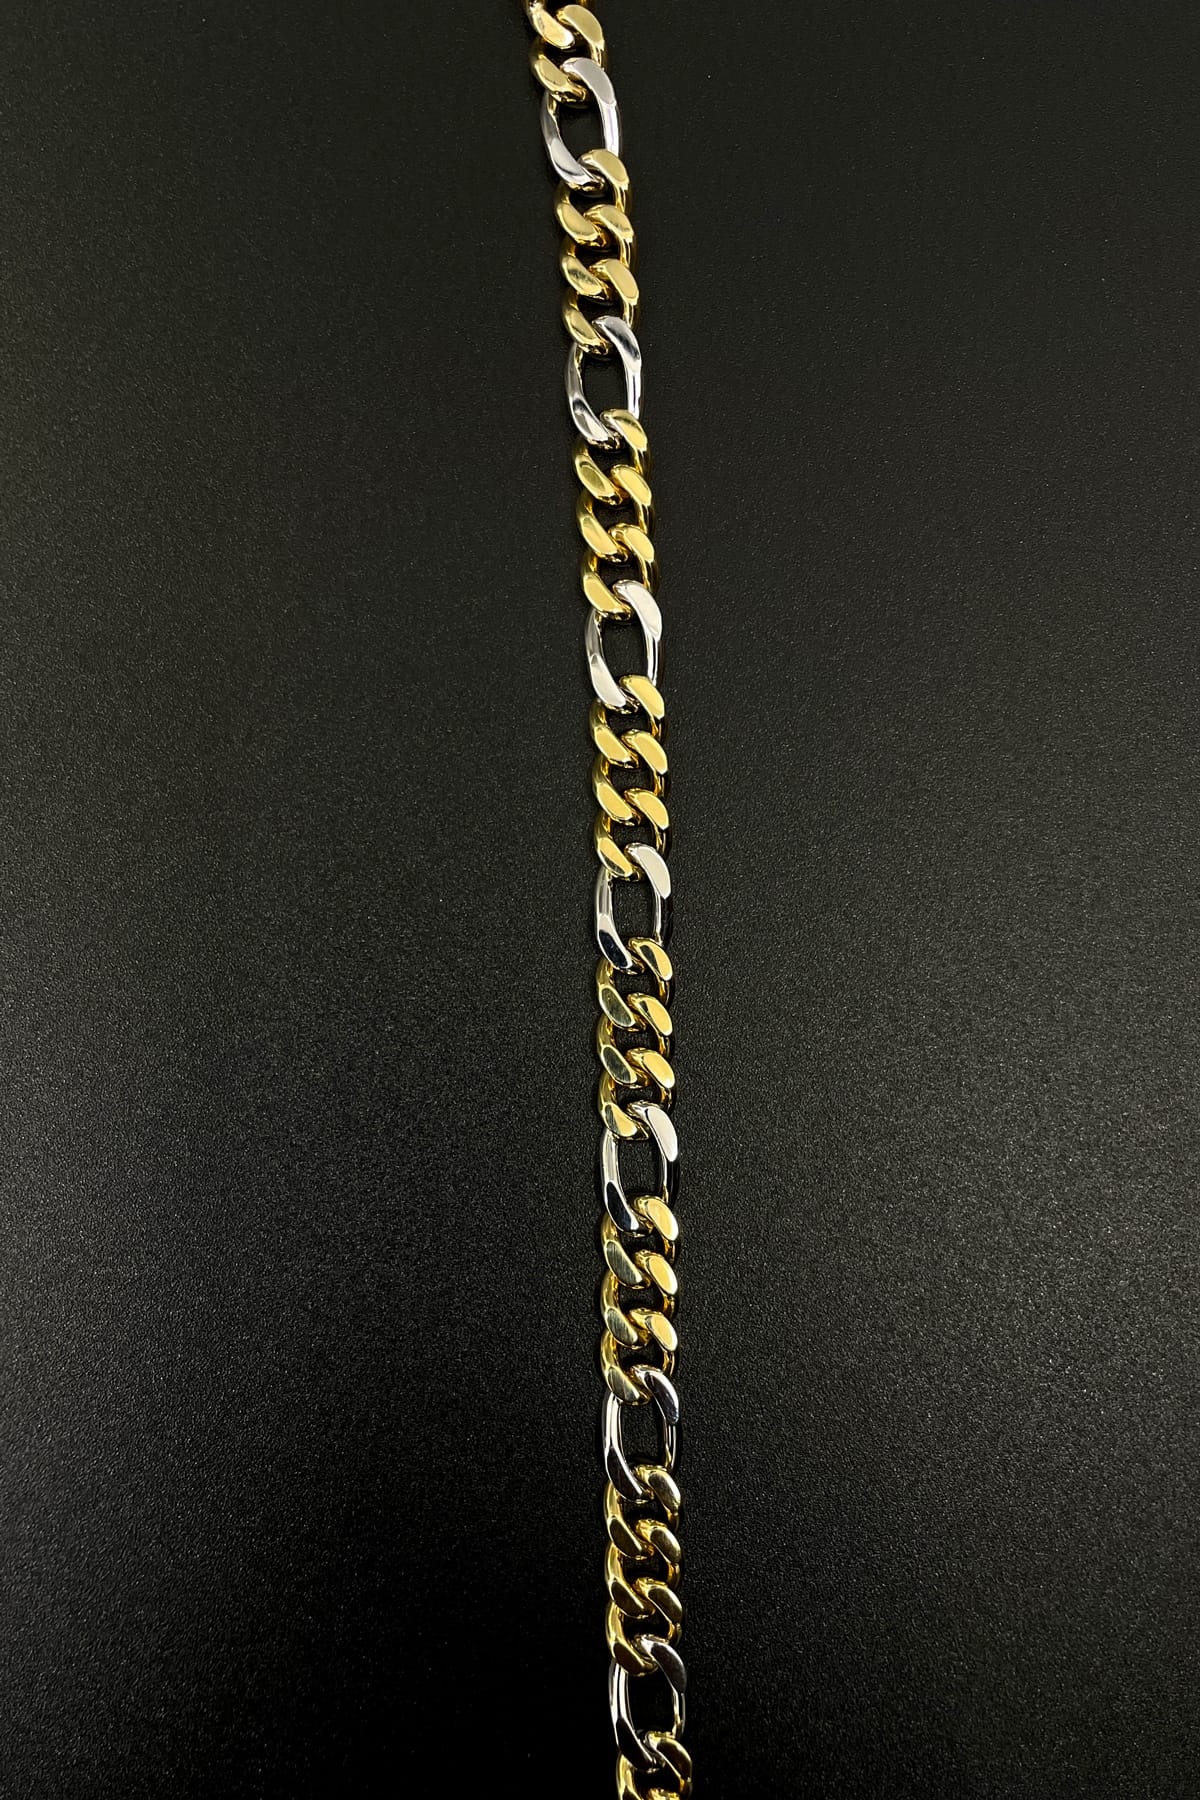 14 Carat Gold 1+3 Curb Exclusive Italian Link Bracelet available at LeGassick Diamonds and Jewellery Gold Coast, Australia.